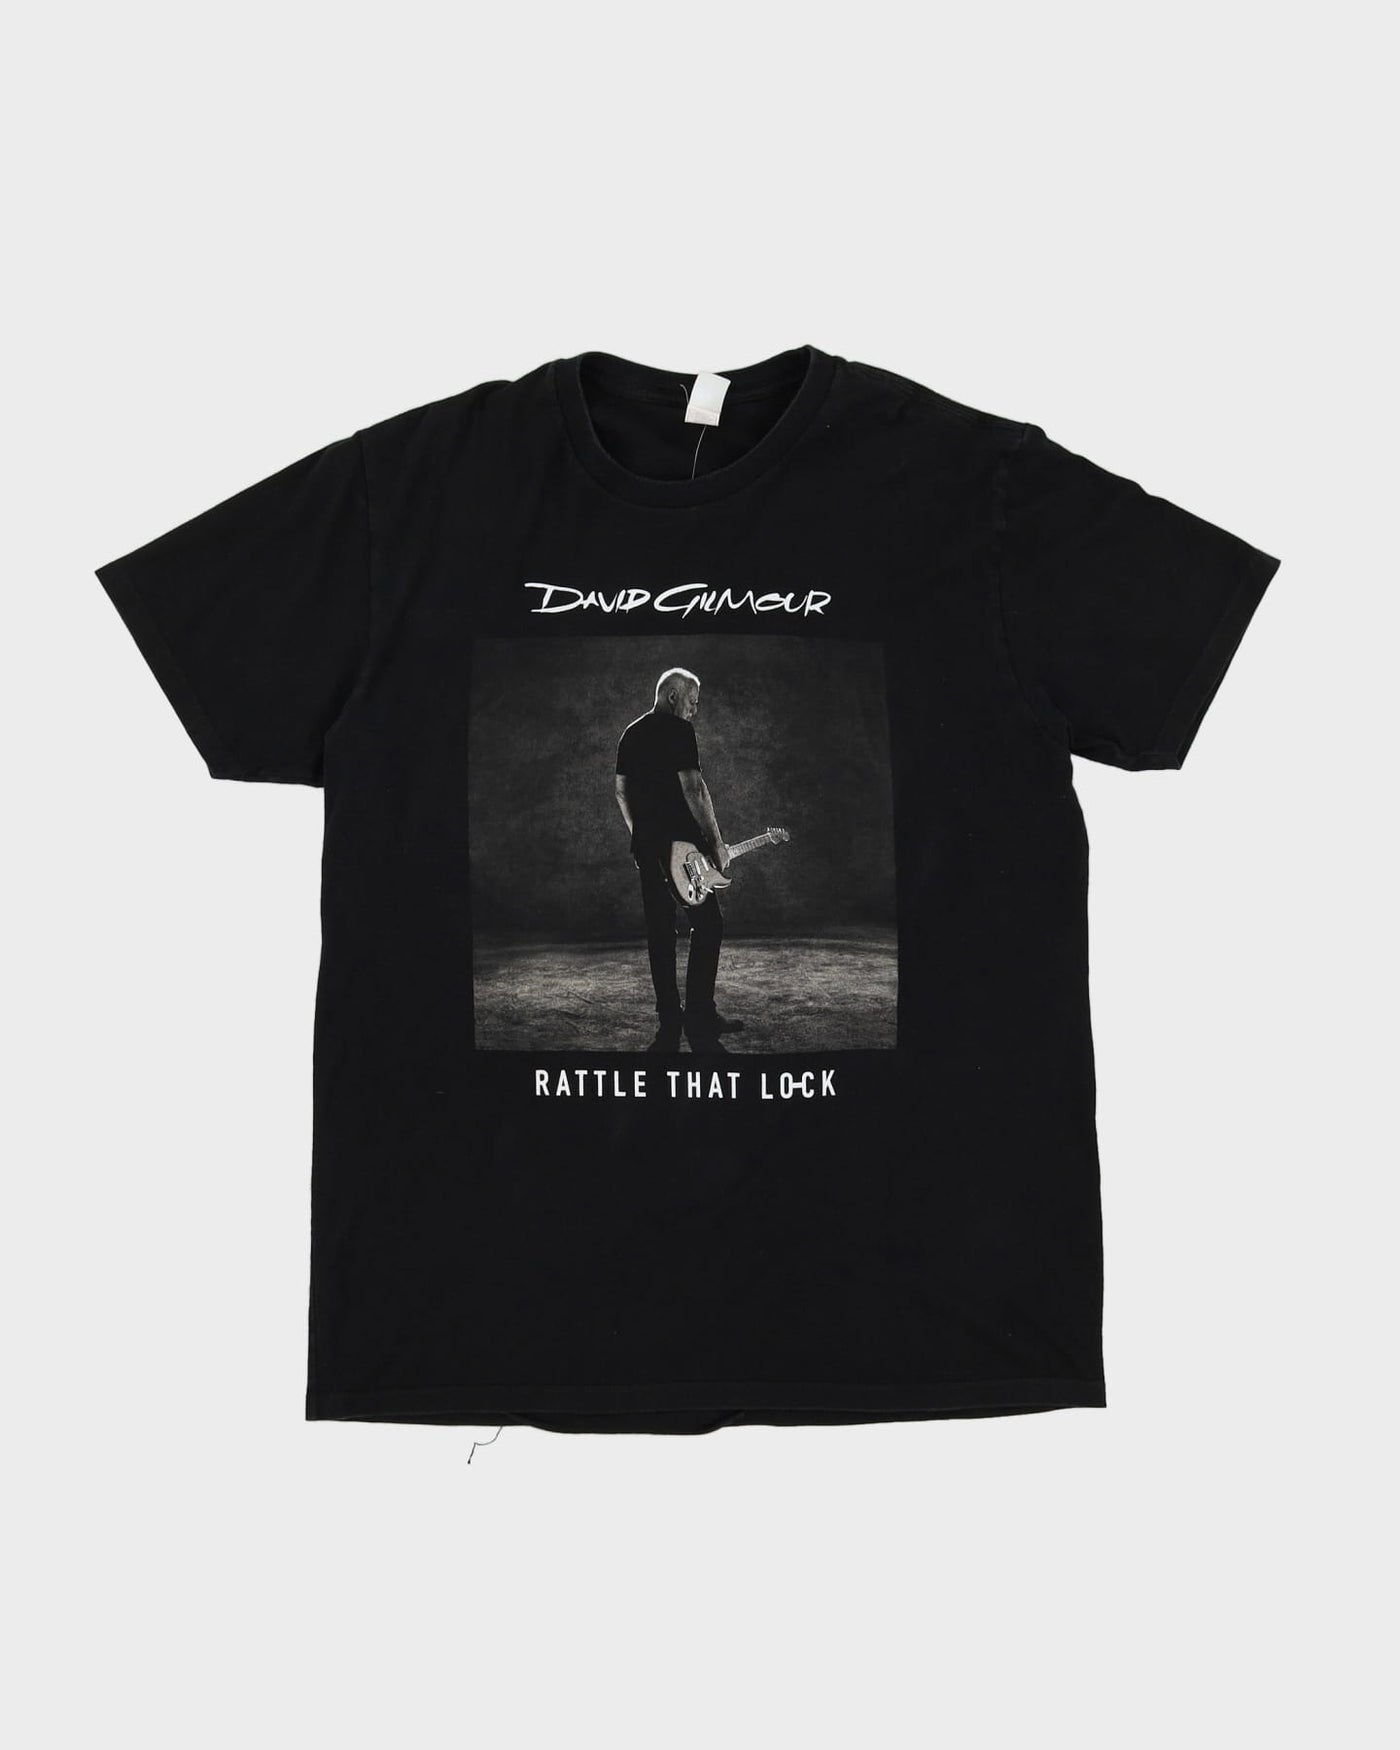 2016 David Gilmour Rattle That Lock Tour Graphic Band T-Shirt - L